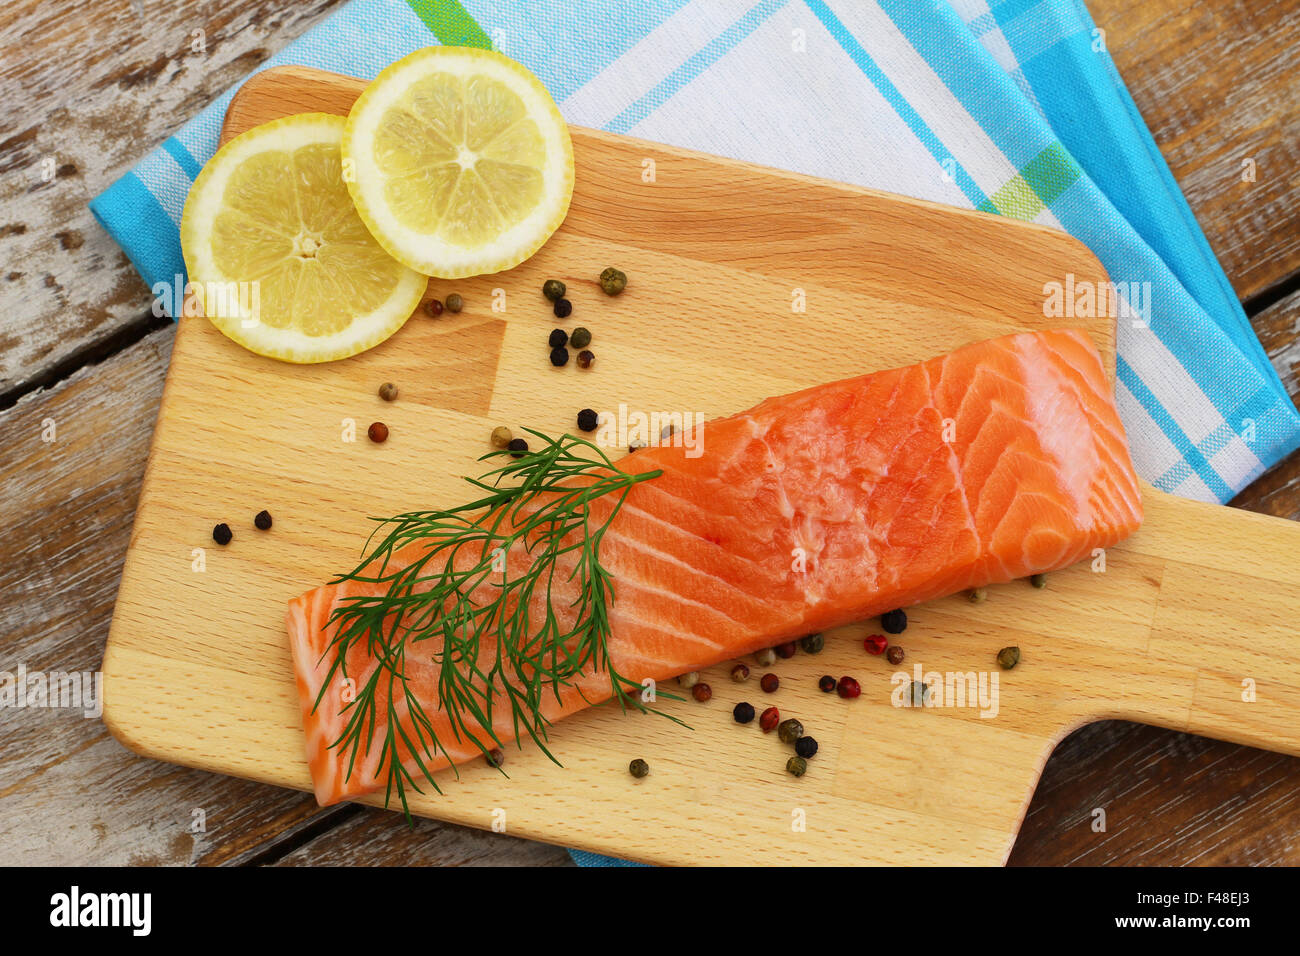 Uncooked salmon steak with lemon on wooden board Stock Photo